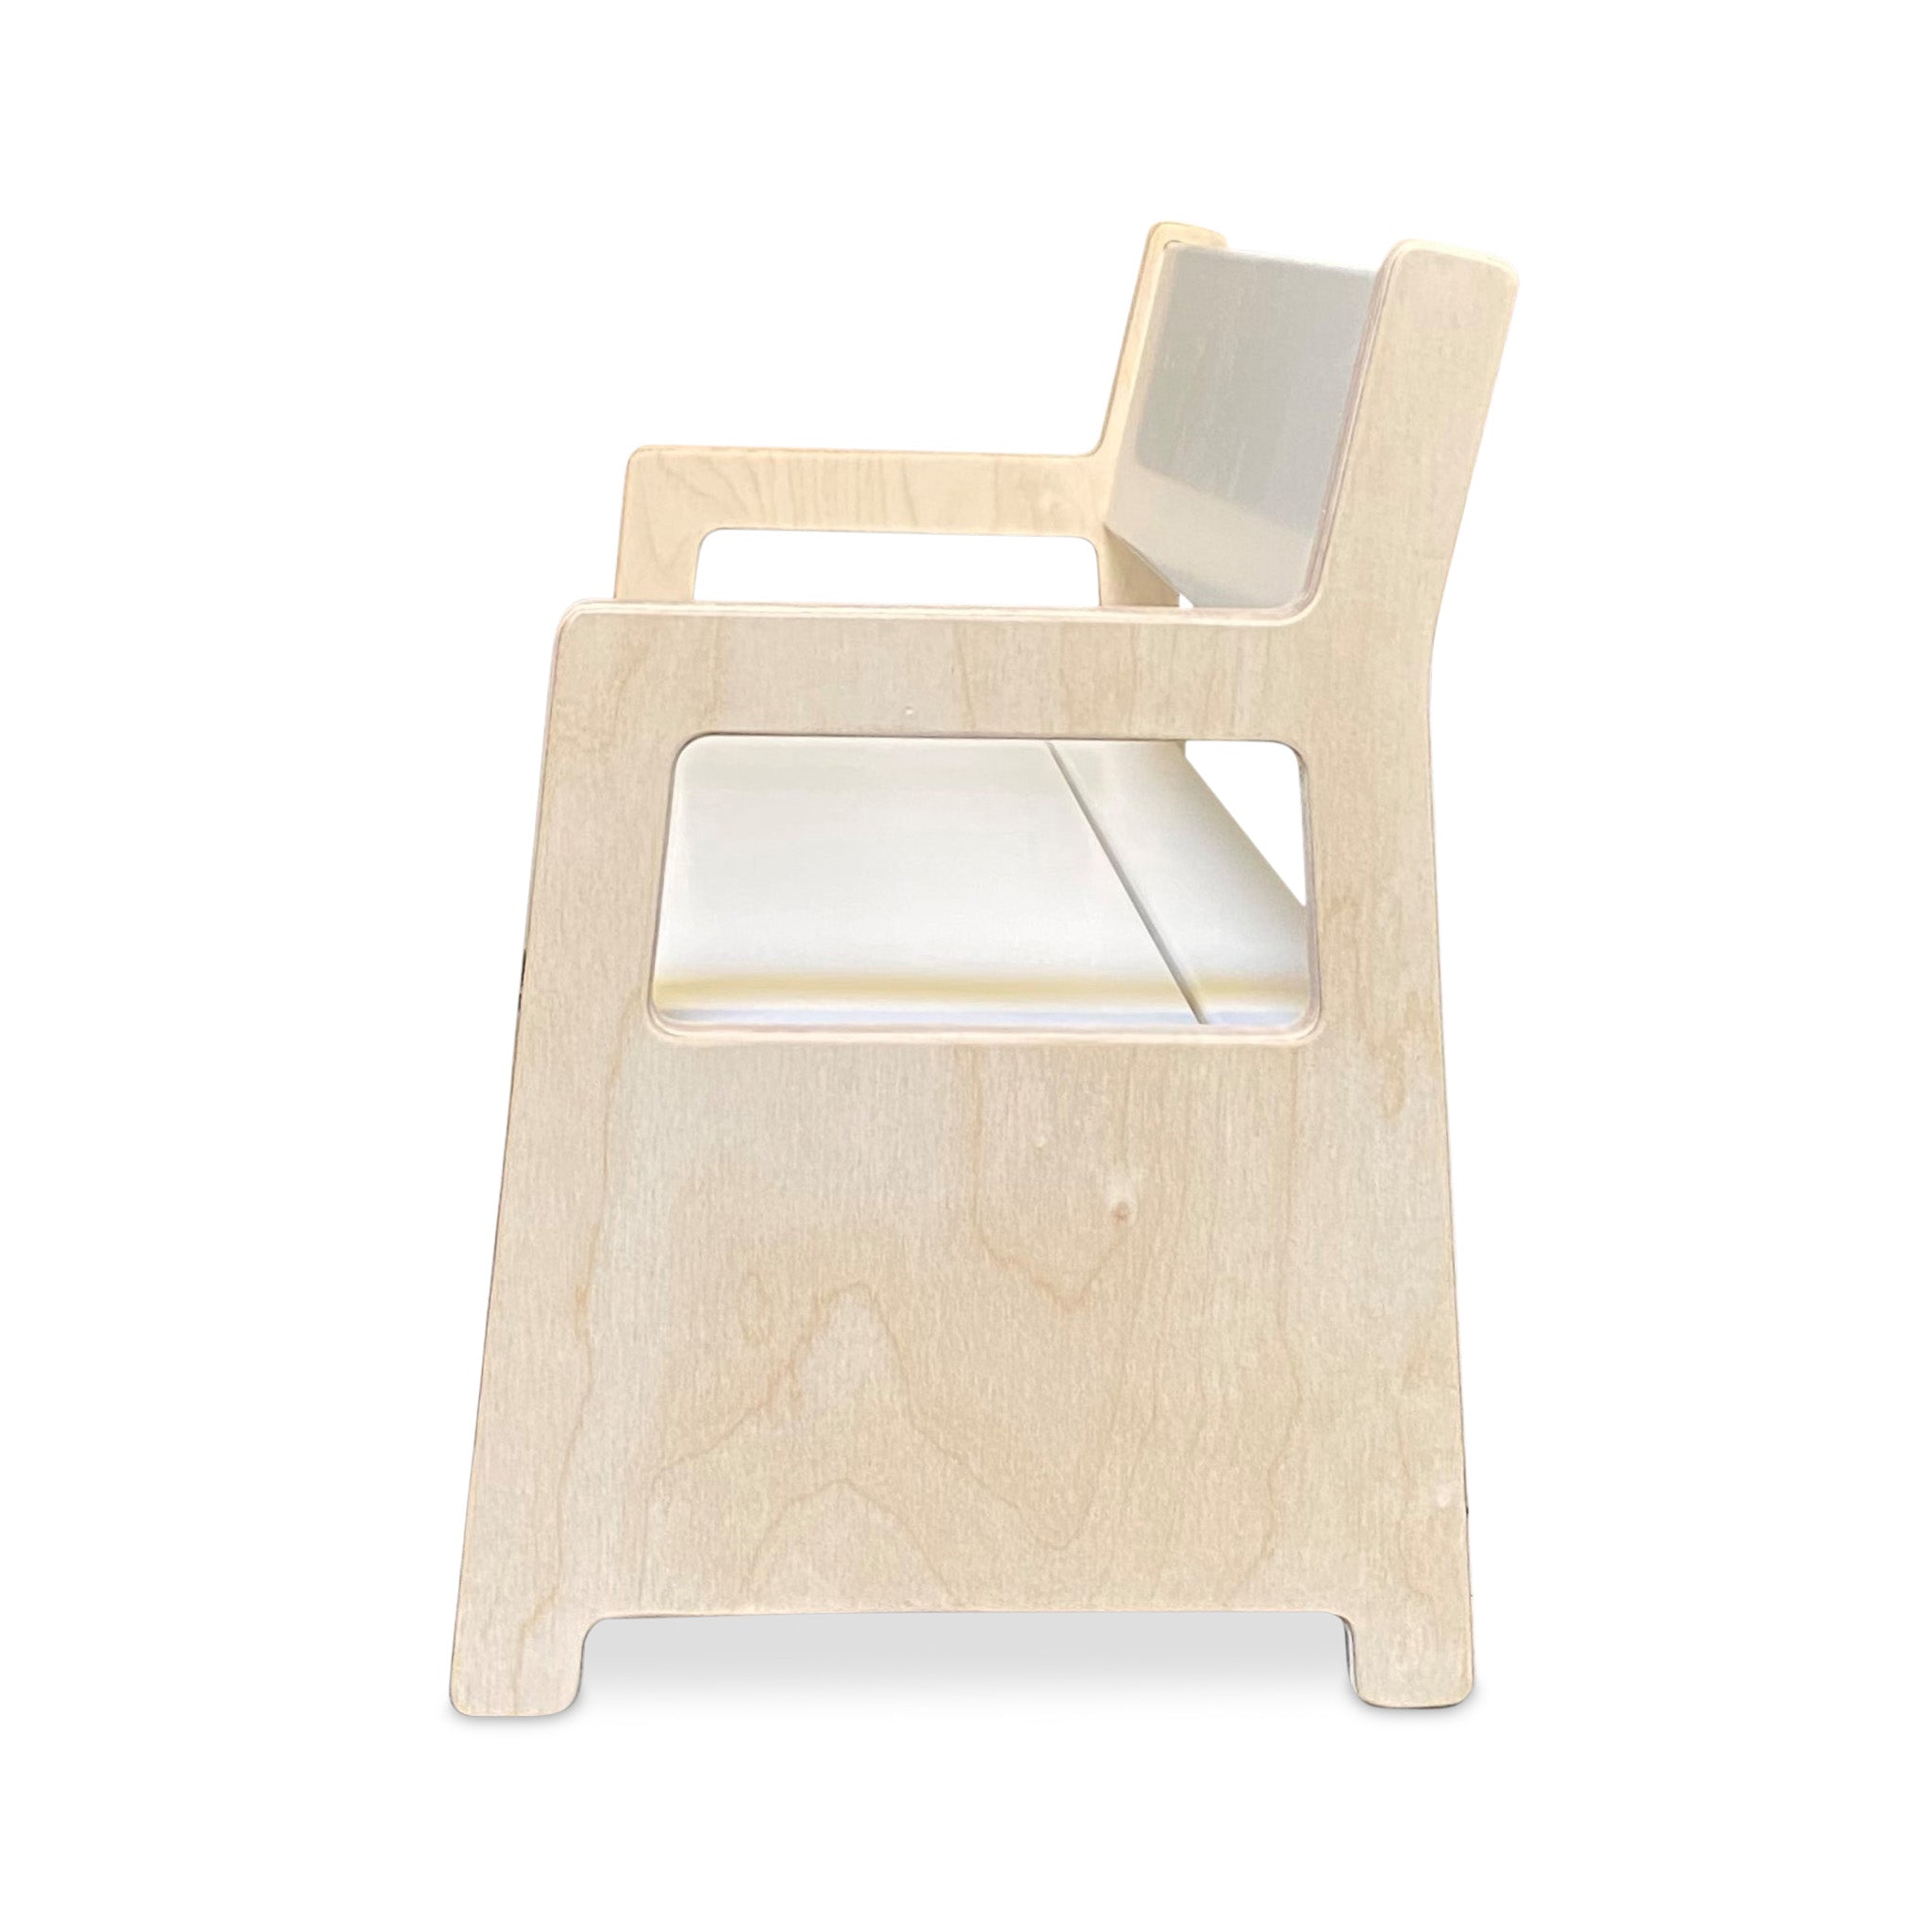 Montessori valve bench | Wooden toy box, storage bench, toy bench - white